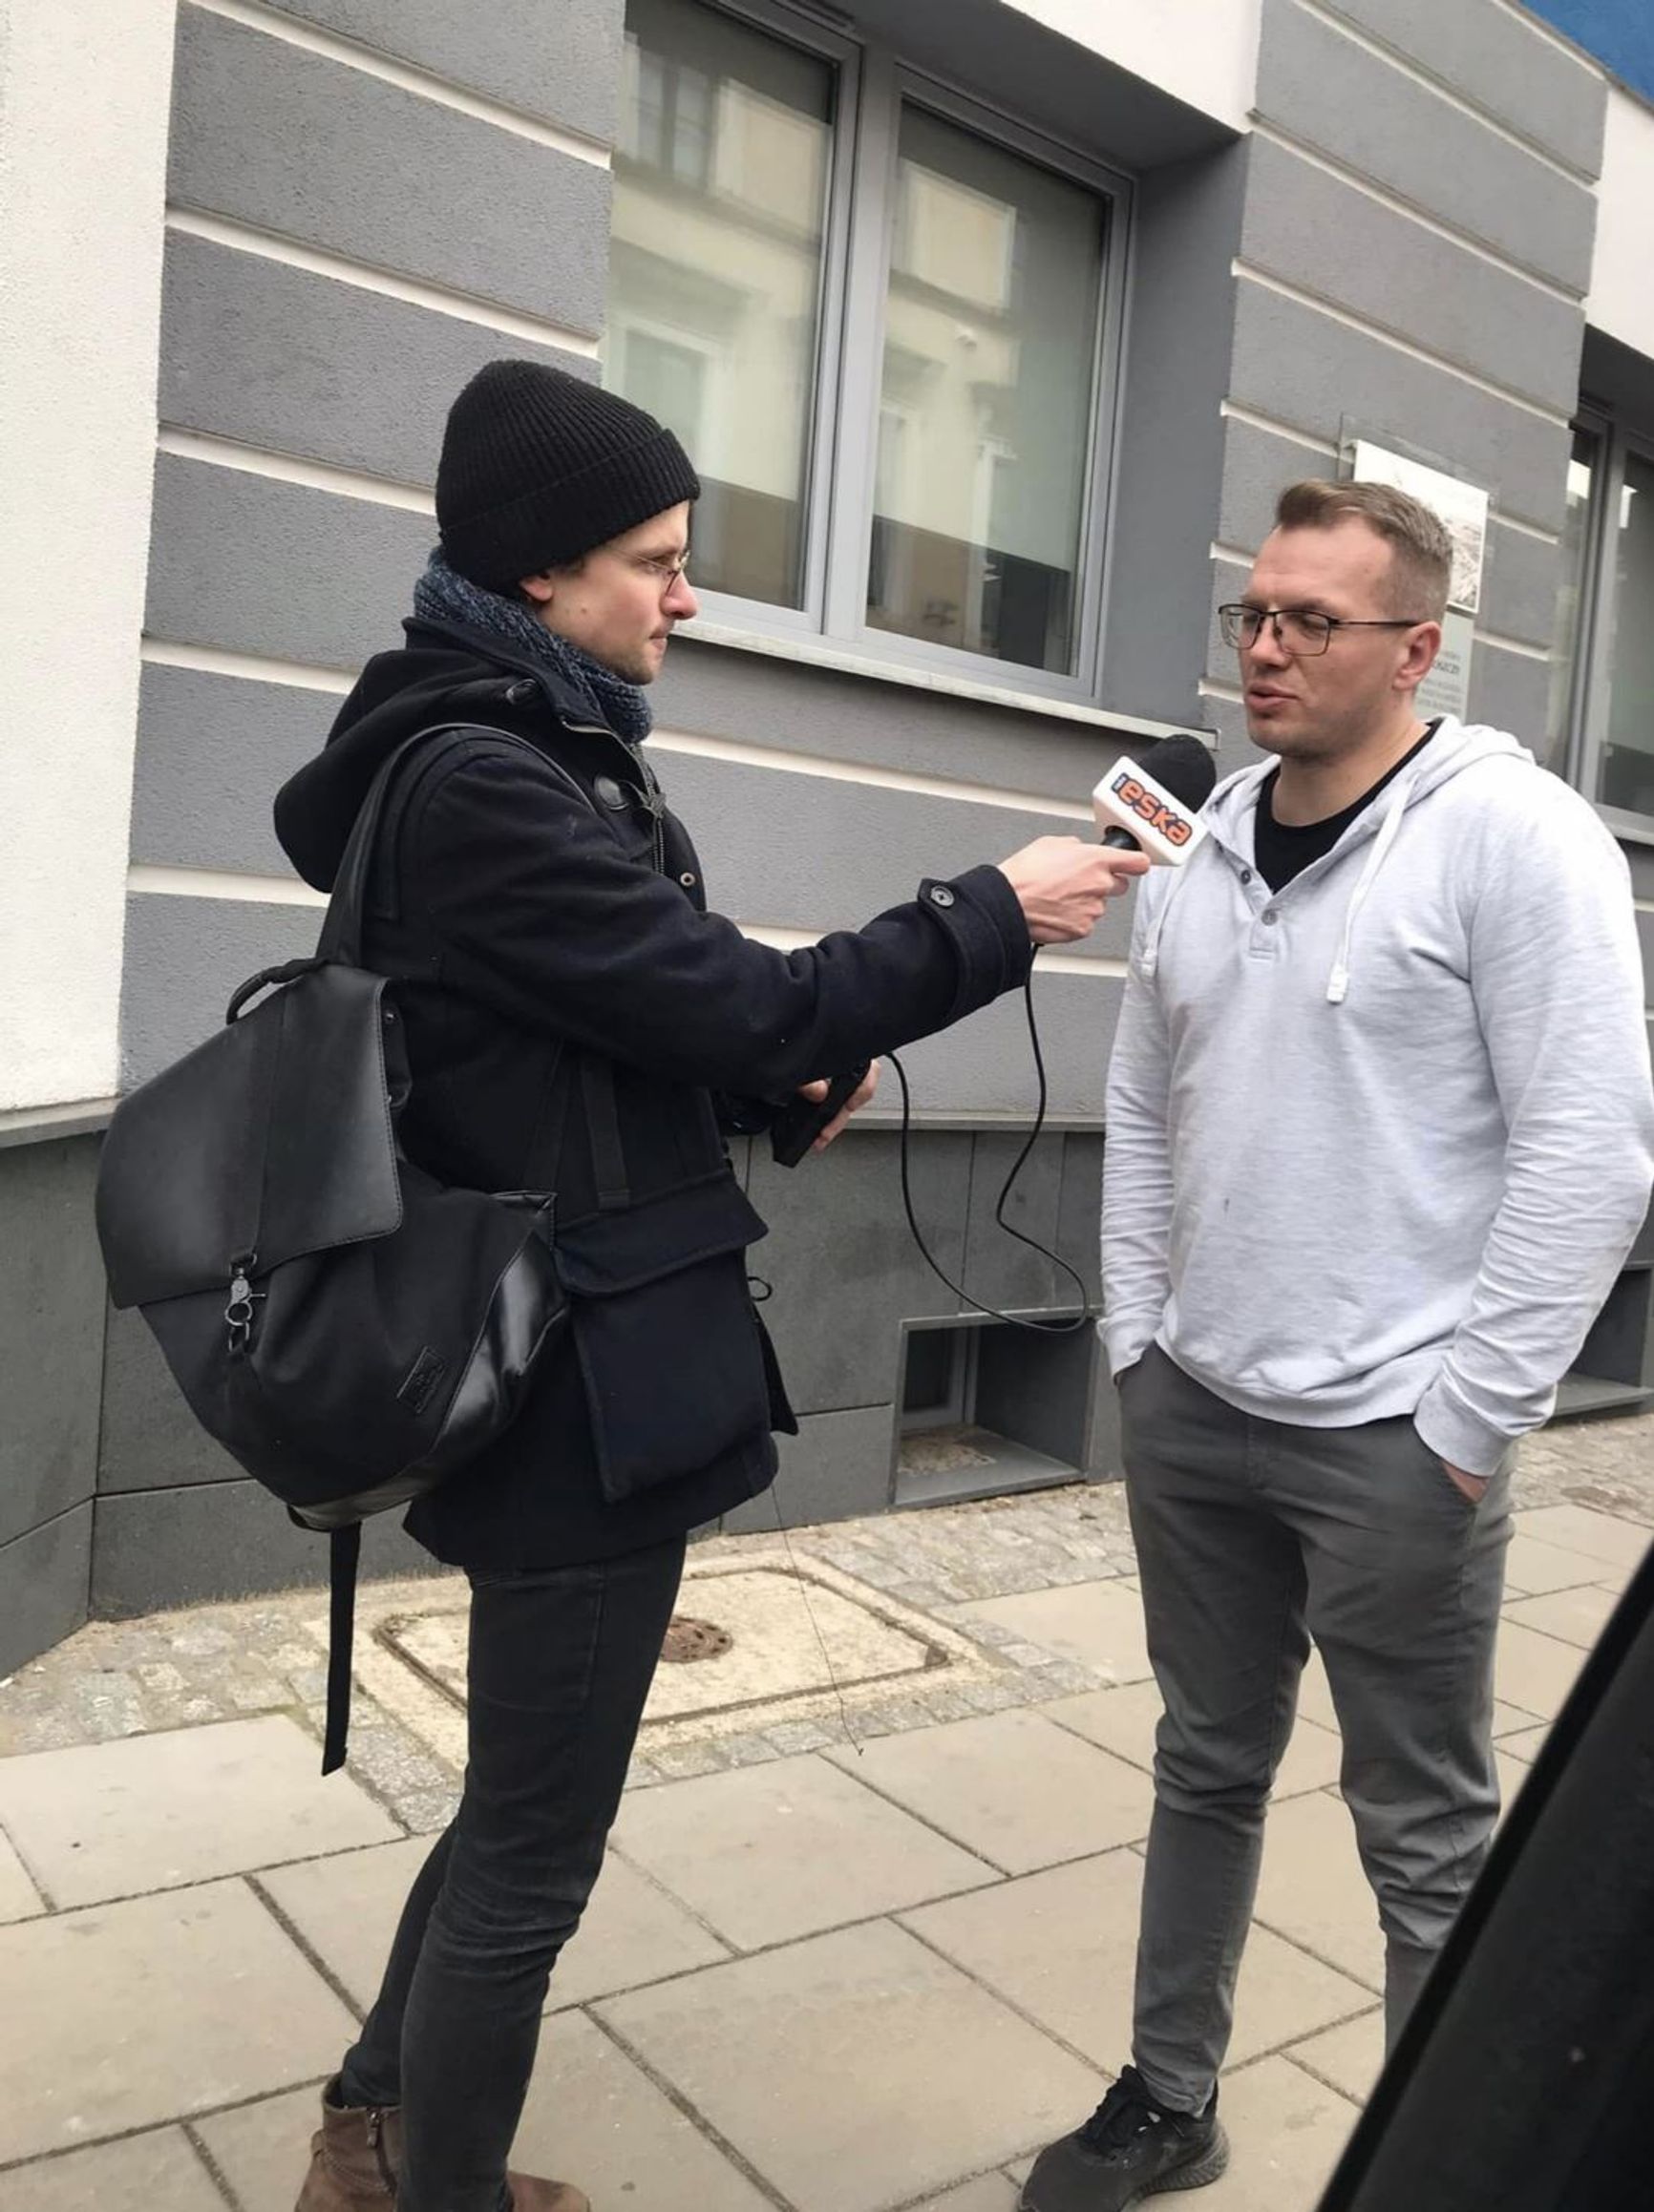 Daszkowski being interviewed regarding the collection of aid for Ukraine